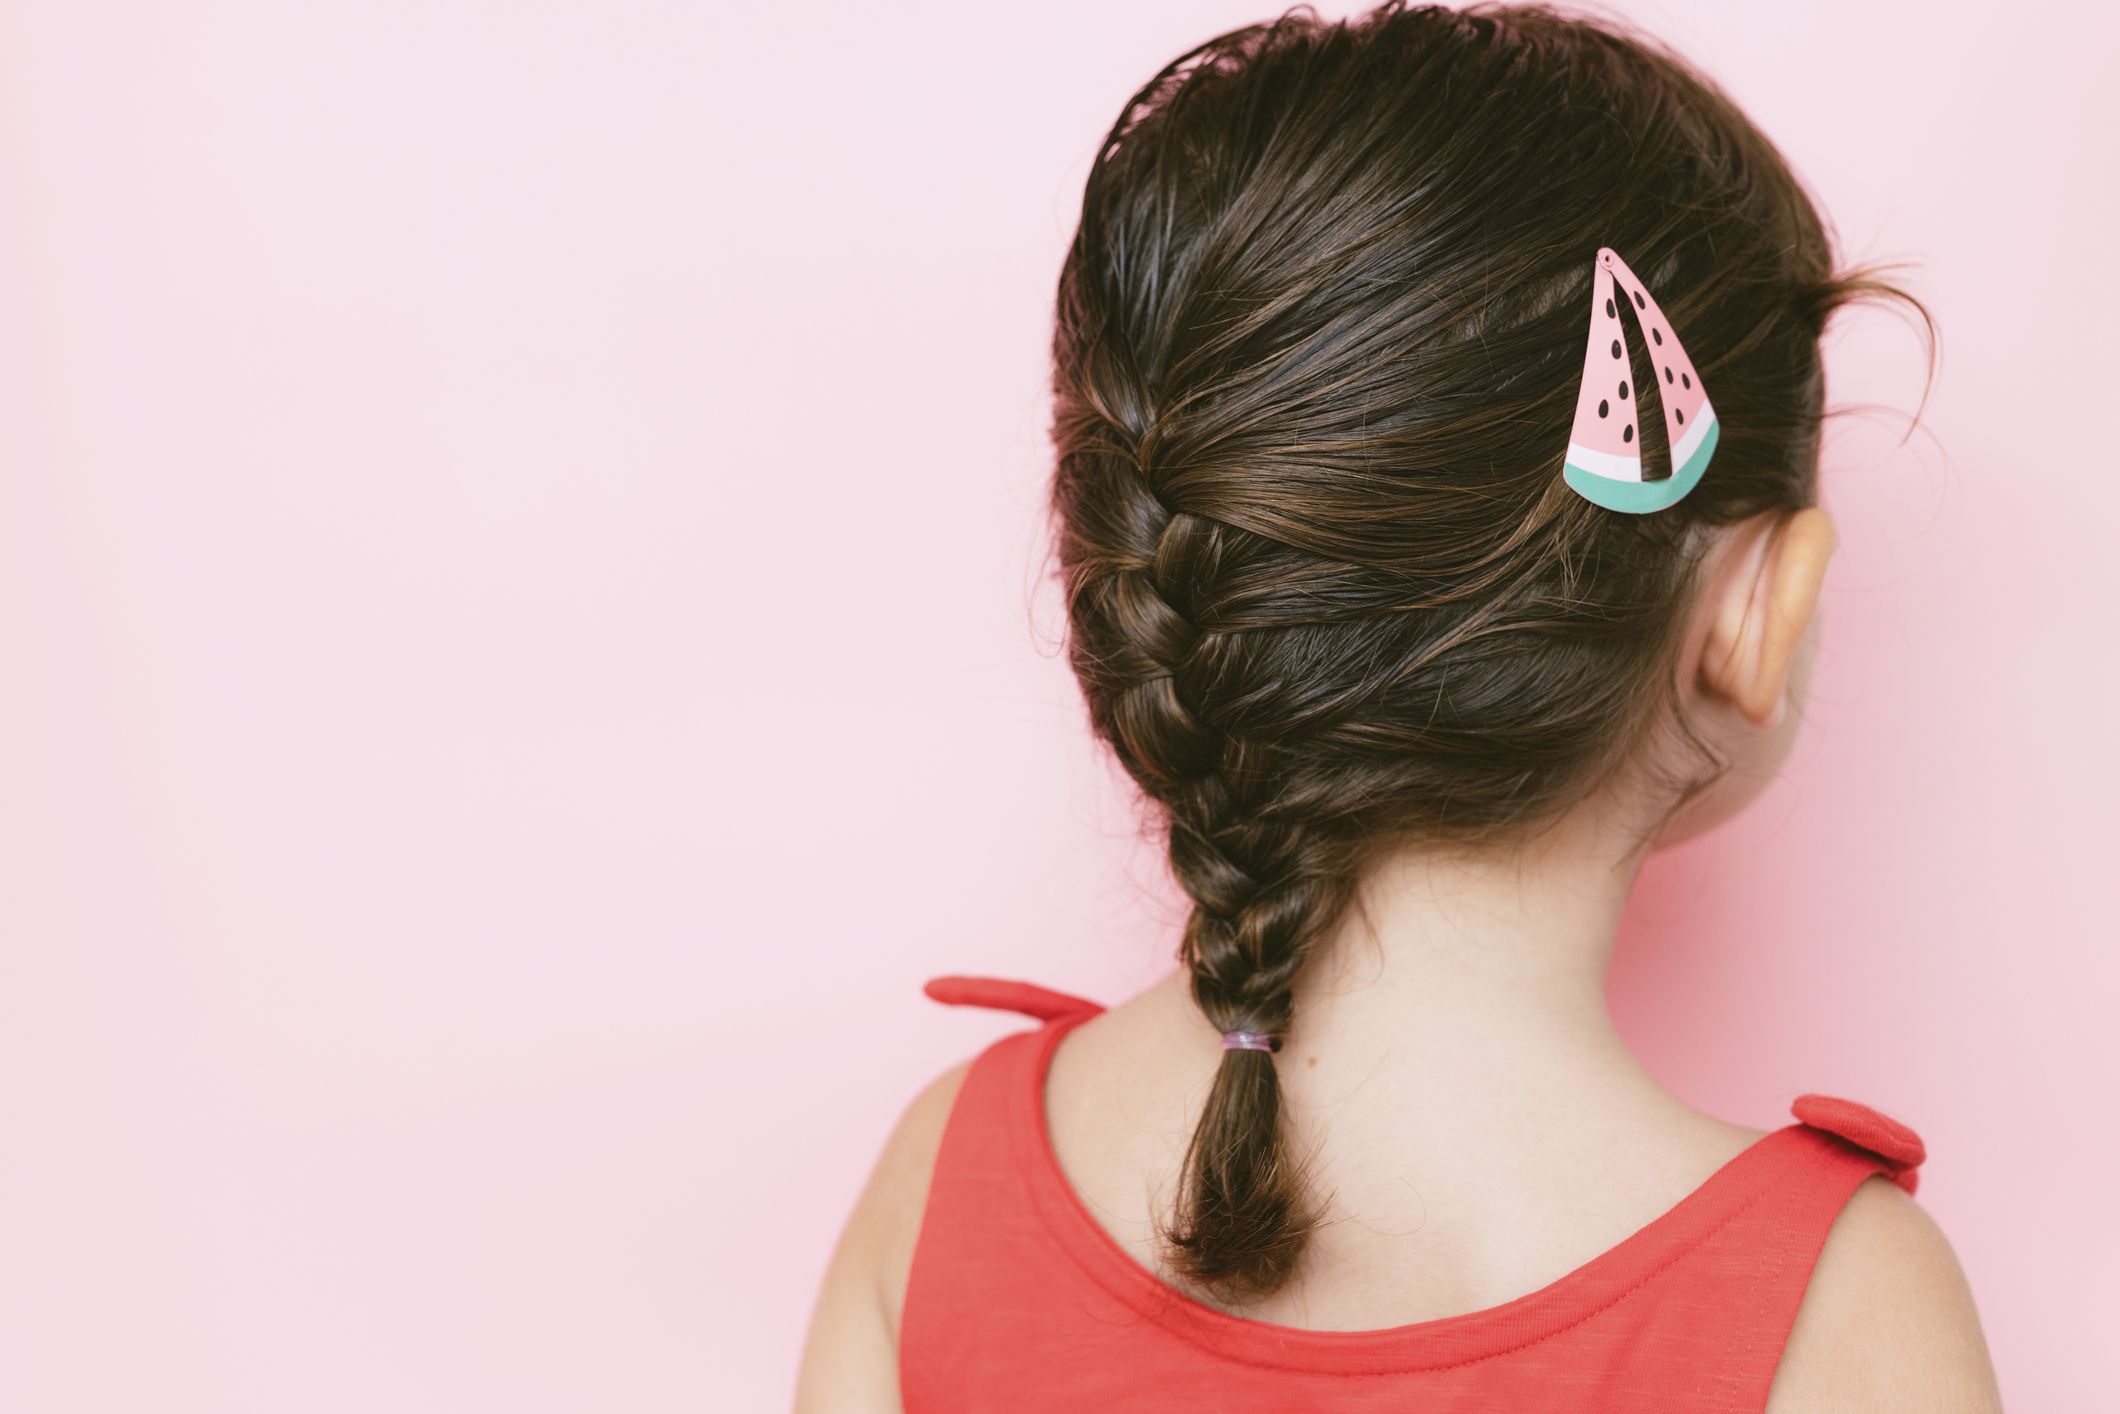 Peinados para niñas con trenzas 8 ideas para tus looks   Blog Druni